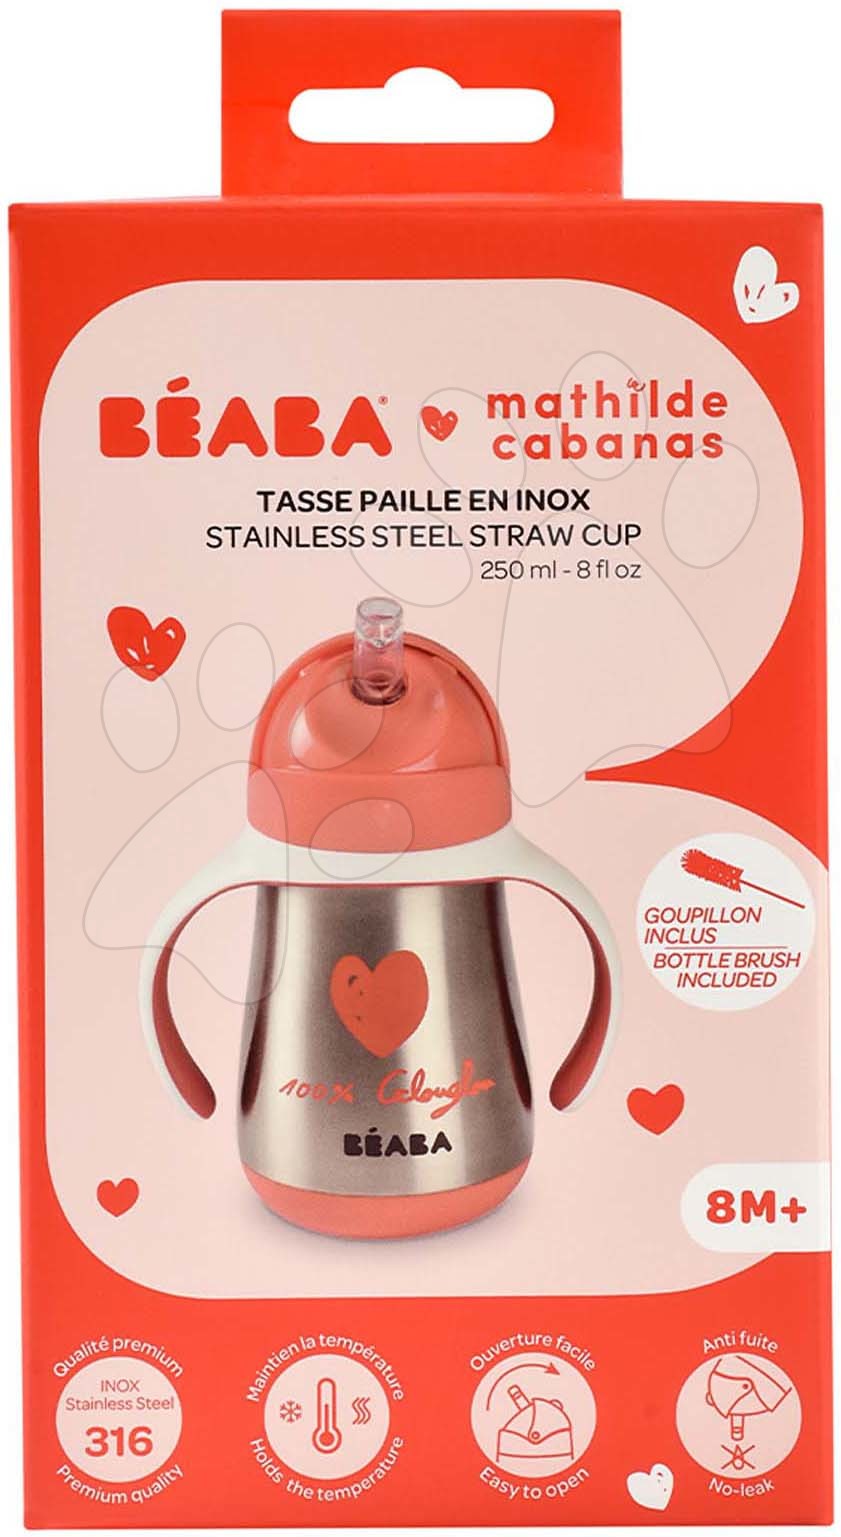 Ivó palack bidon duplafalú Stainless Steel Straw Cup Beaba Mathilde Cabanas 250ml piros rozsdamentes acélból 8 hó-tól BE913523